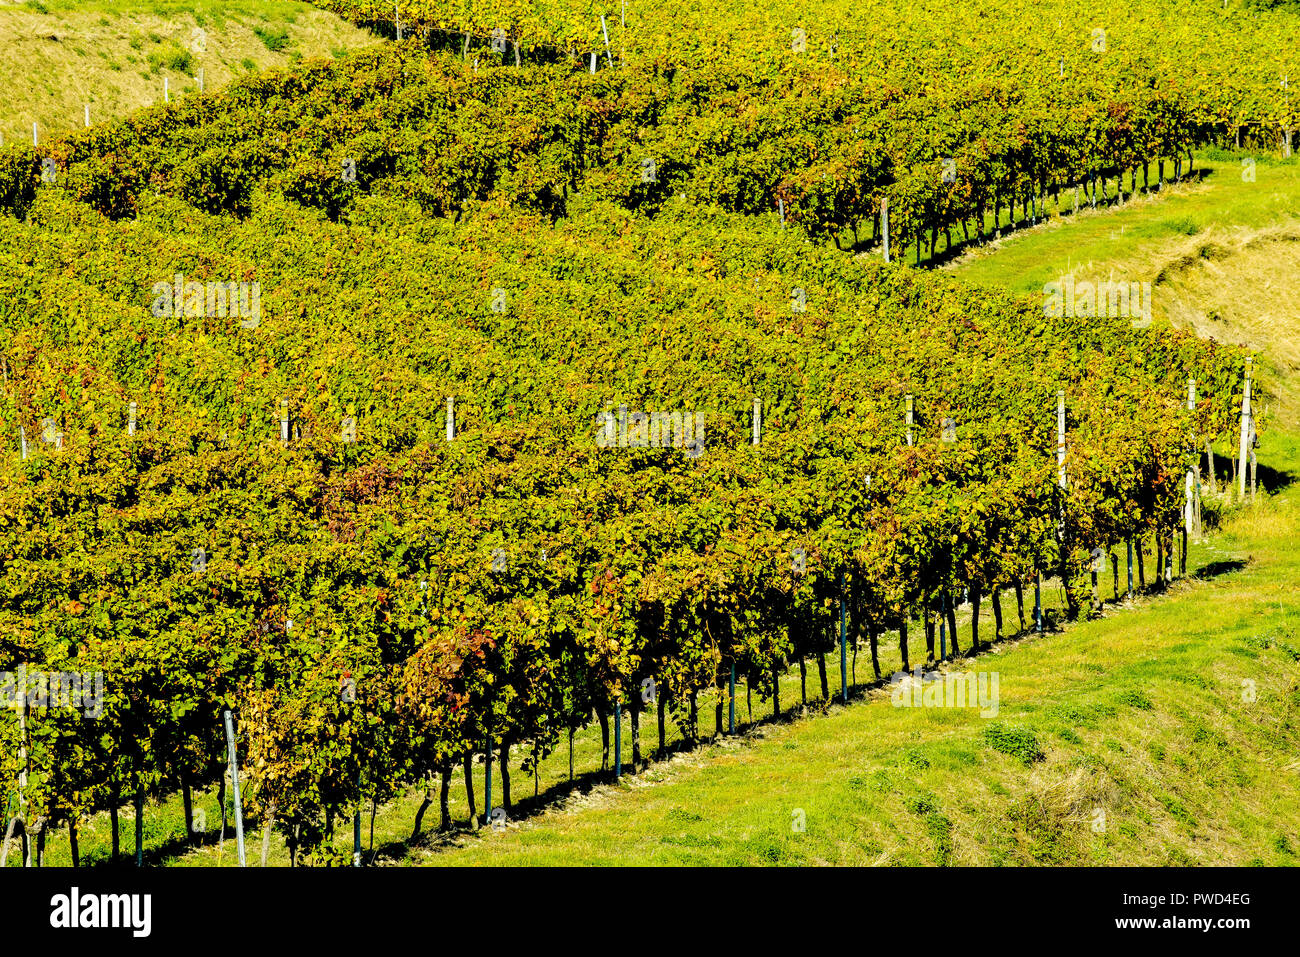 Picturesque terraced field vineyards in autumn colors in Endingen am Kaiserstuhl, Germany. Stock Photo